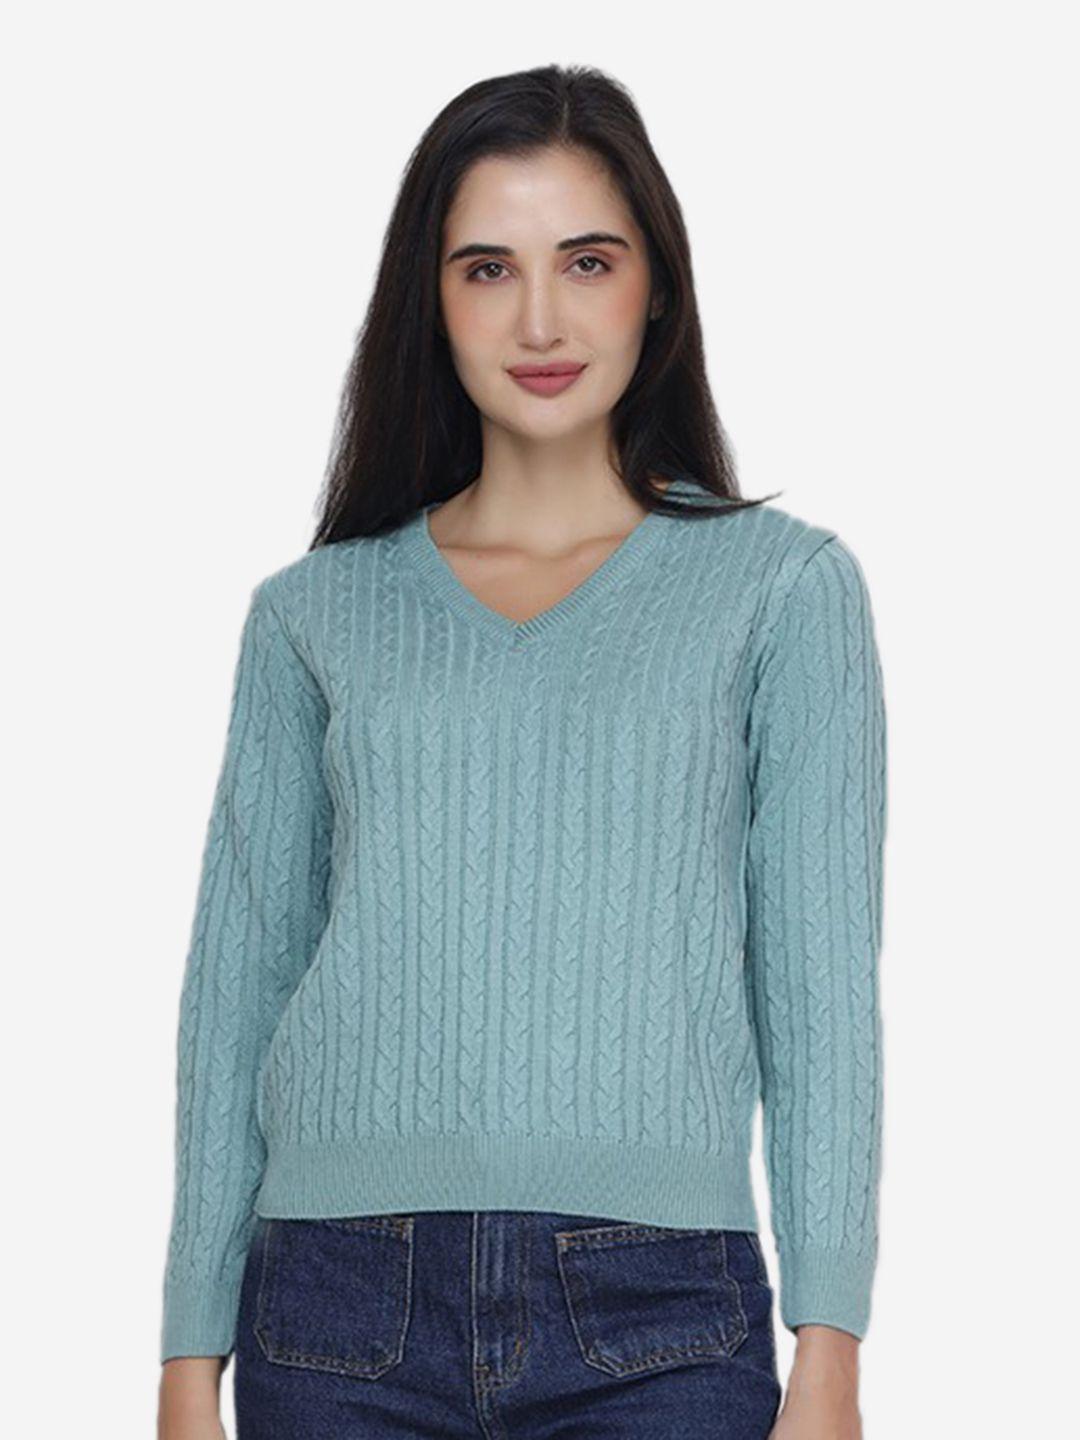 joe hazel cable knit acrylic pullover sweater